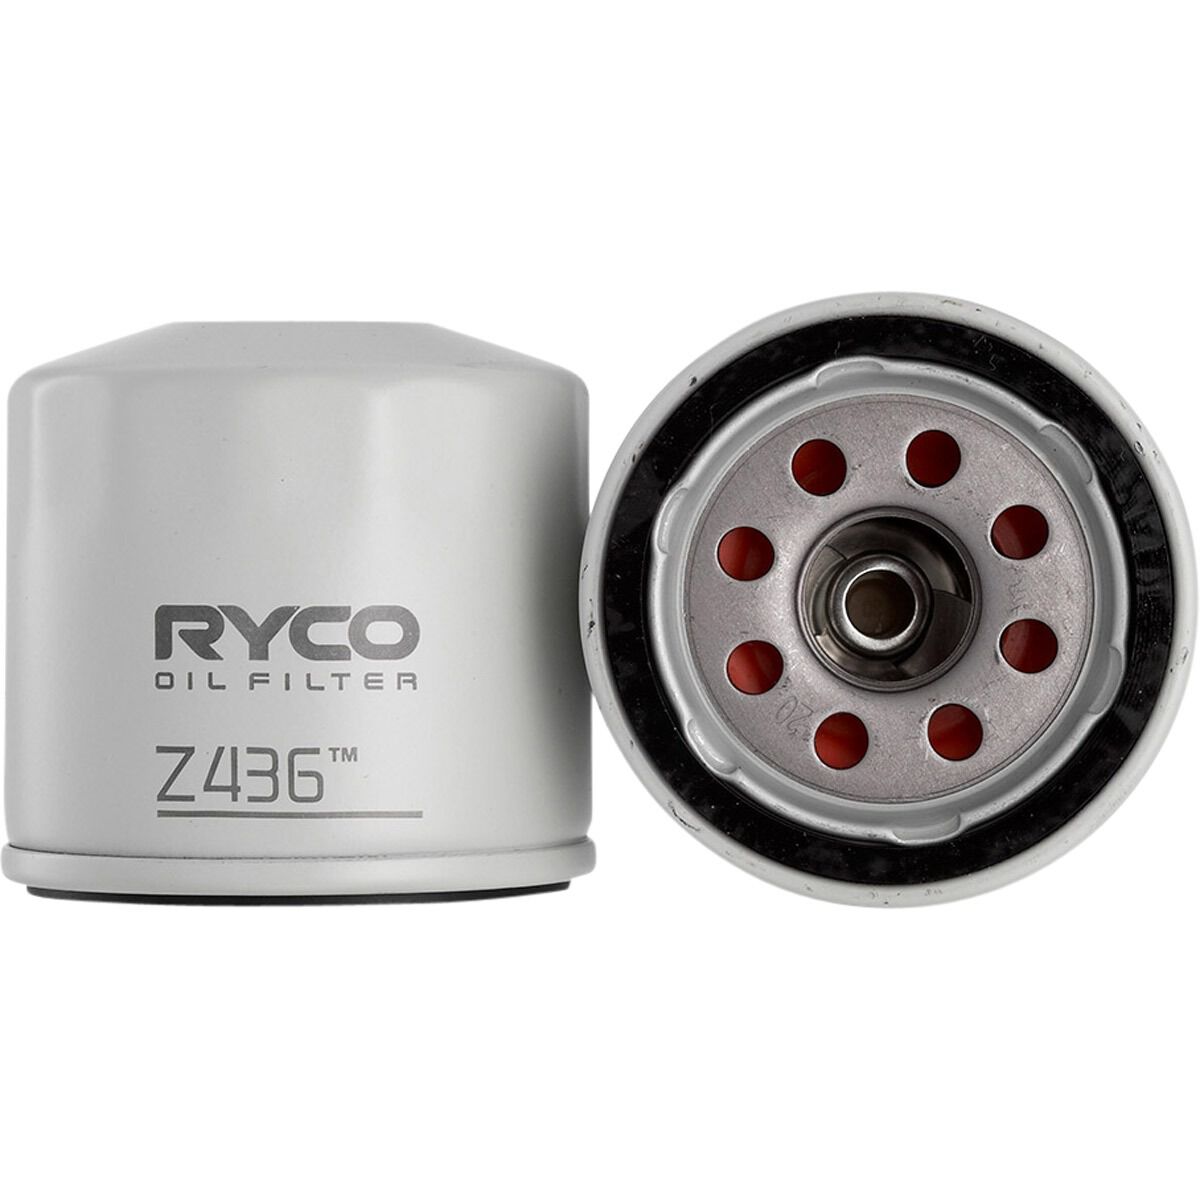 Ryco Oil Filter - Z436 | Supercheap Auto New Zealand